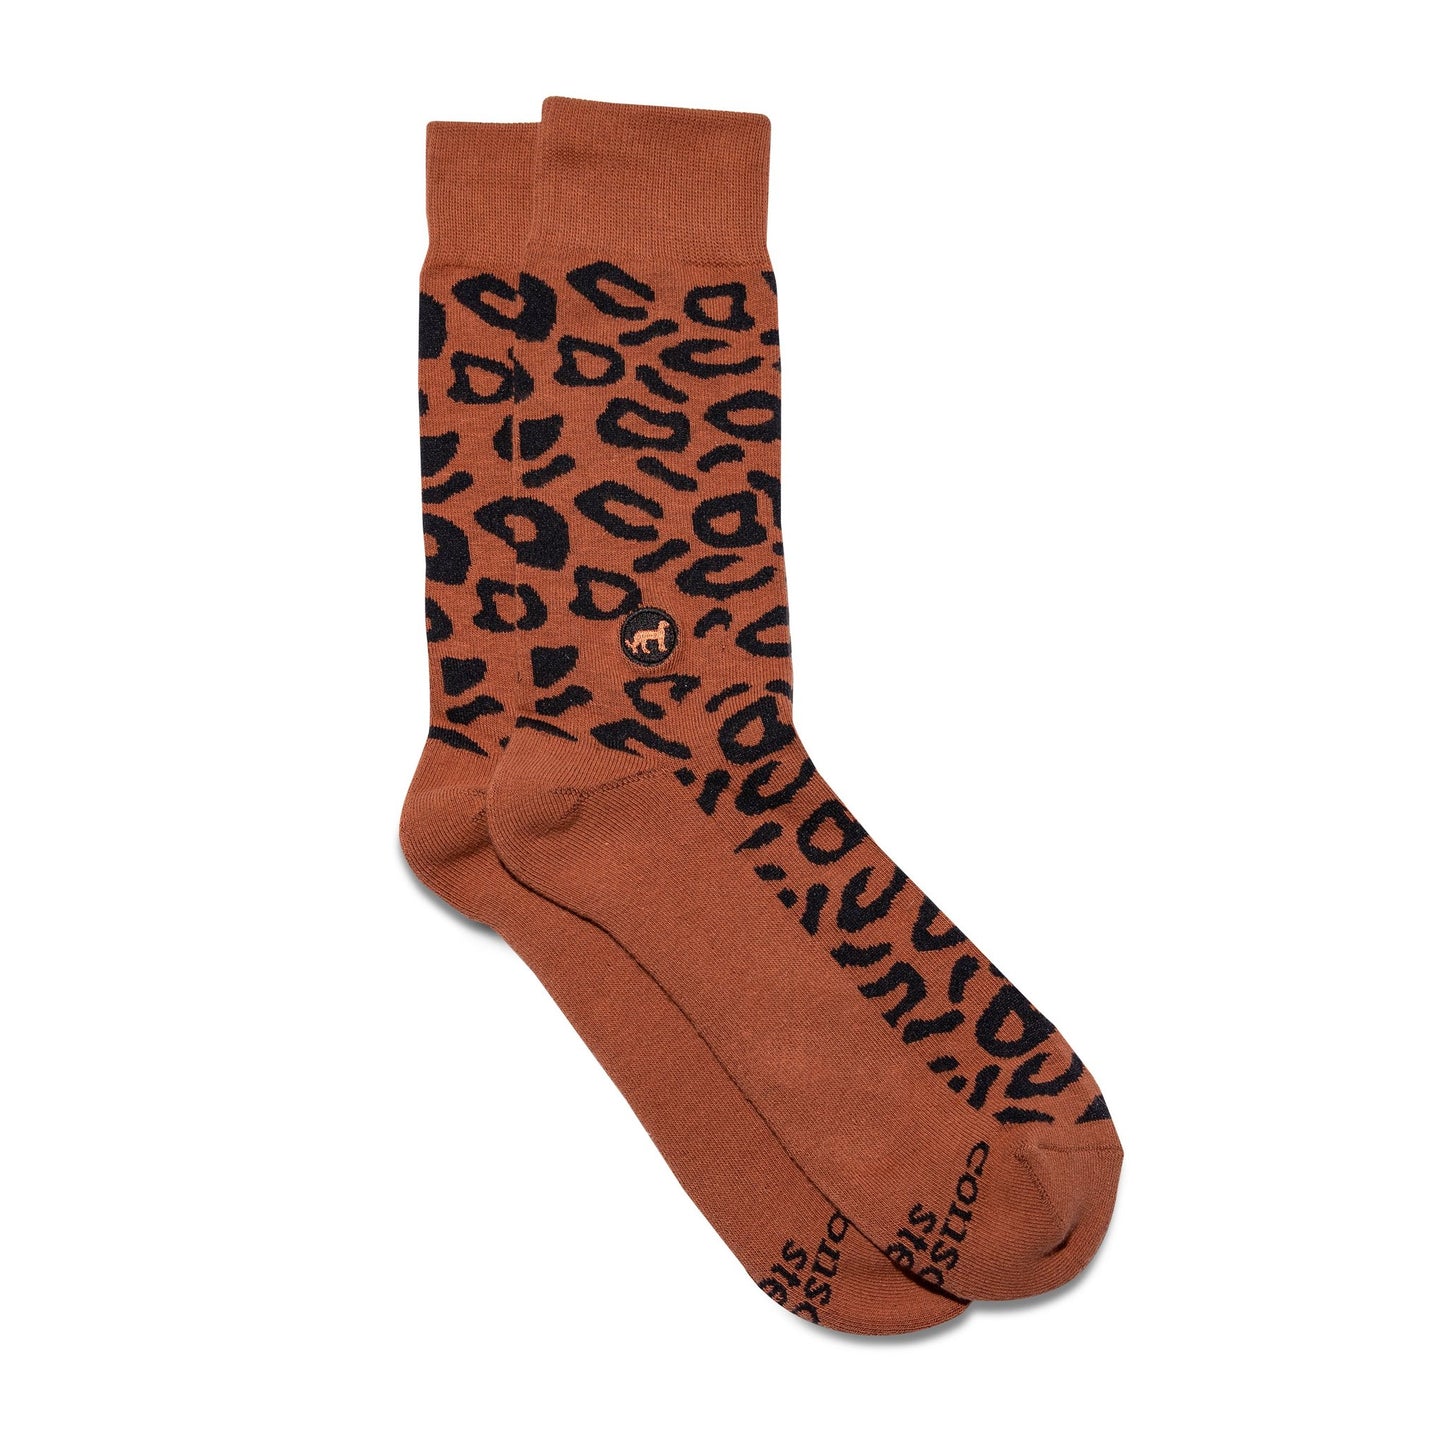 Conscious Step: Socks that Protect Cheetahs